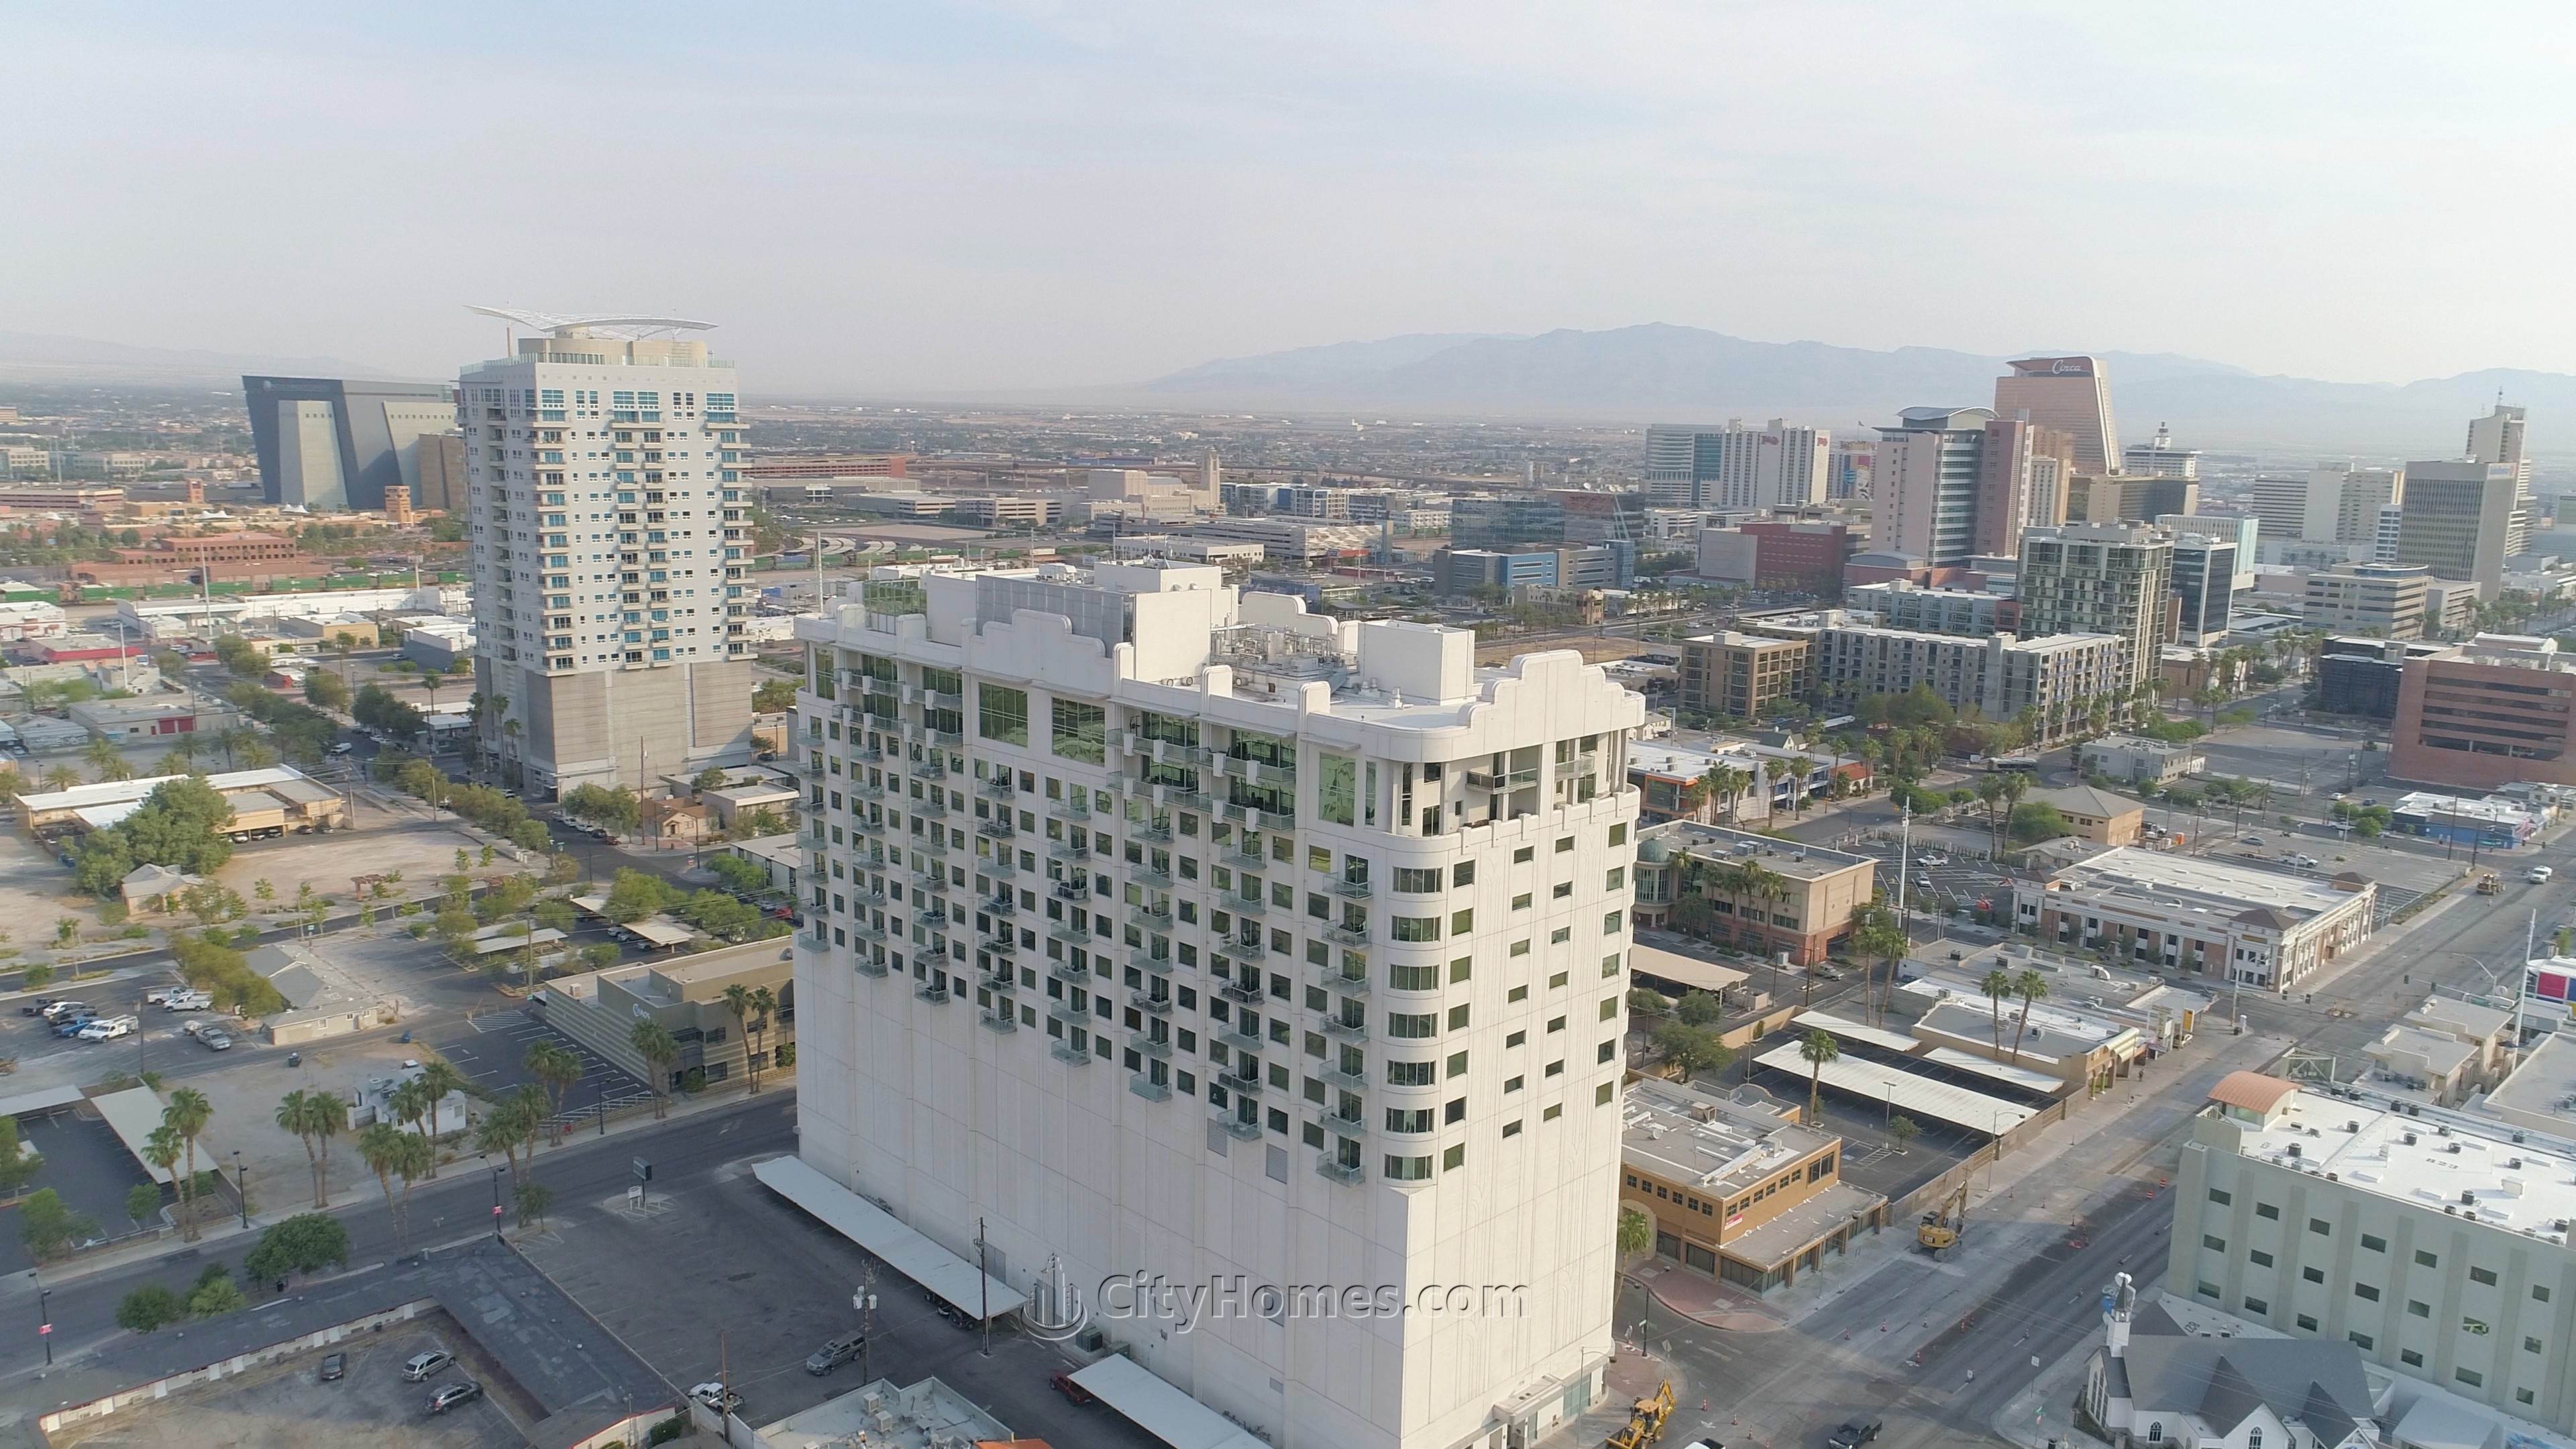 4. Soho Lofts building at 900 S Las Vegas Blvd, Las Vegas, NV 89101